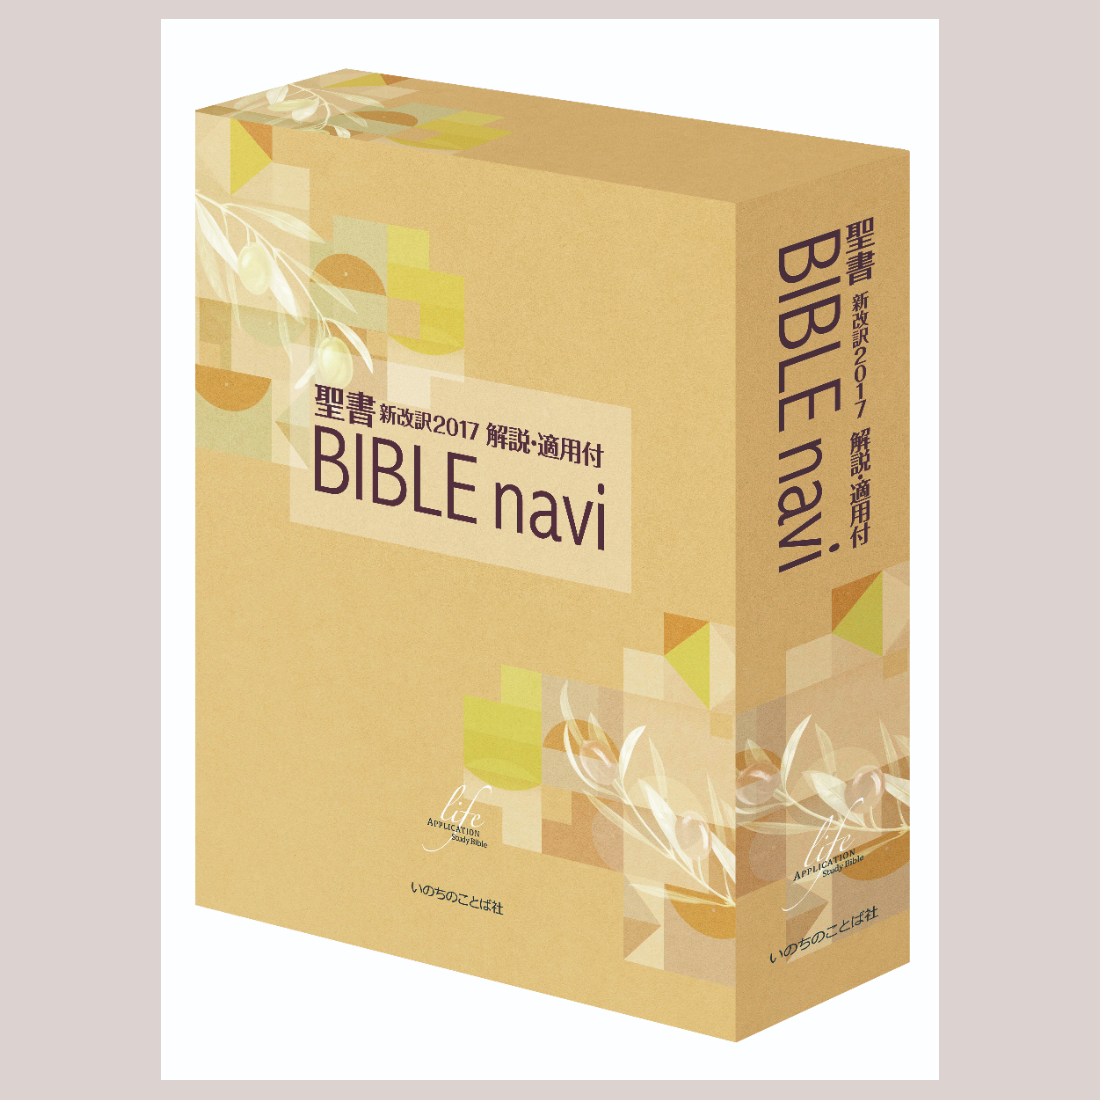 BIBLE navi　聖書　新改訳2017　解説・適用付 | 聖書やキリスト教書籍の通販サイト - バイブルハウス南青山